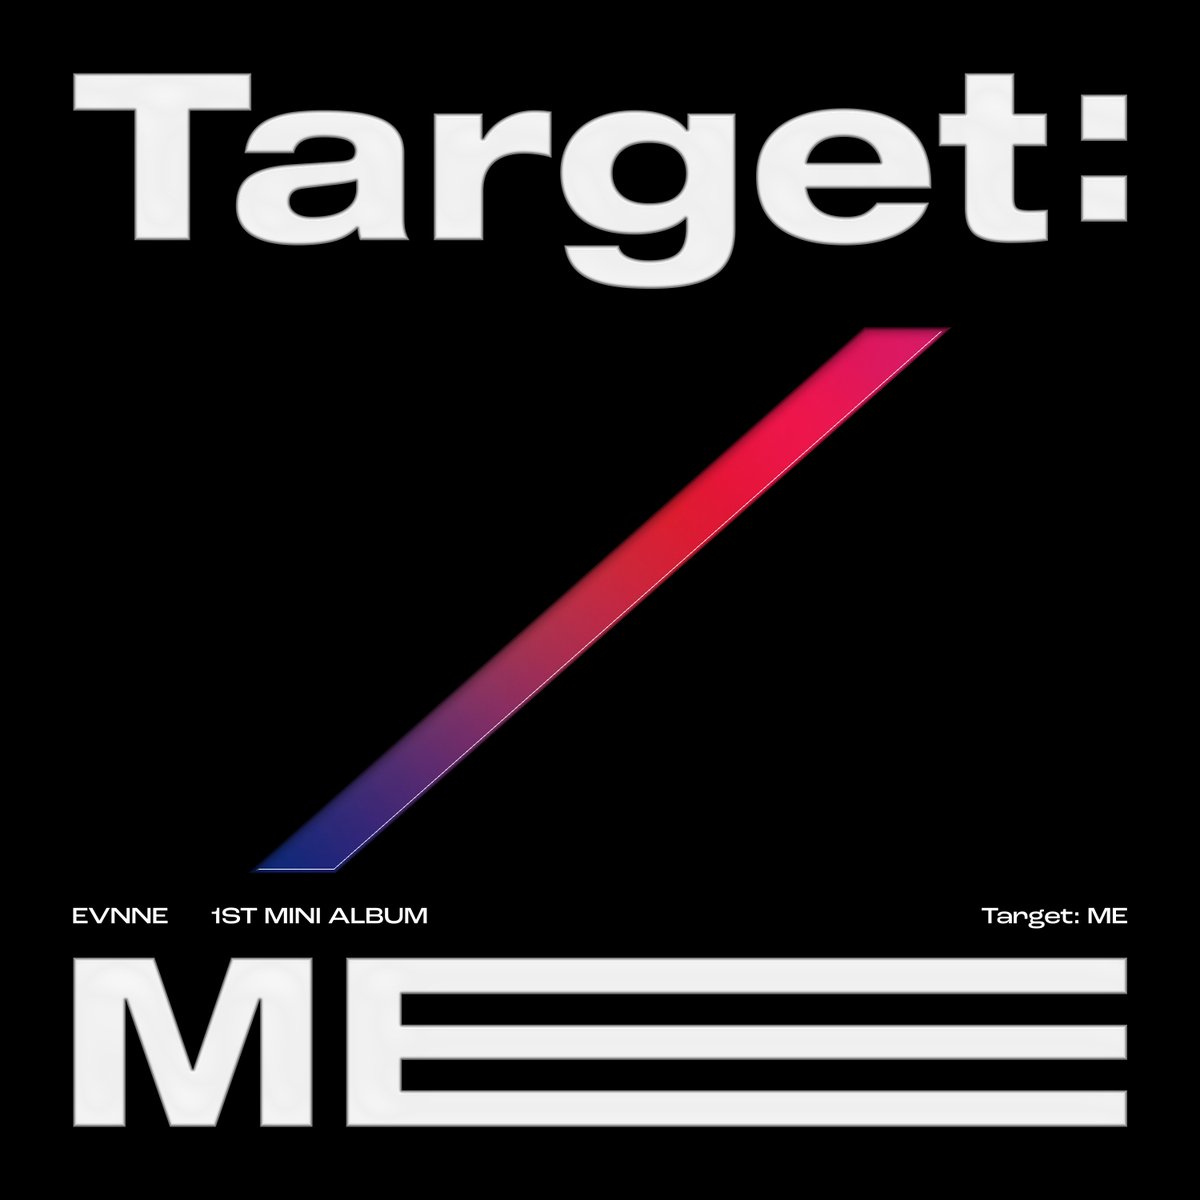 [🎧]
EVNNE
1st Mini Album [Target: ME] 
음원이 공개되었습니다. 🎯

이븐의 첫 데뷔 앨범 
모든 음원 사이트에서 만나보세요 😈

#EVNNE #이븐
#Target_ME #TROUBLE
#20230919_6PM